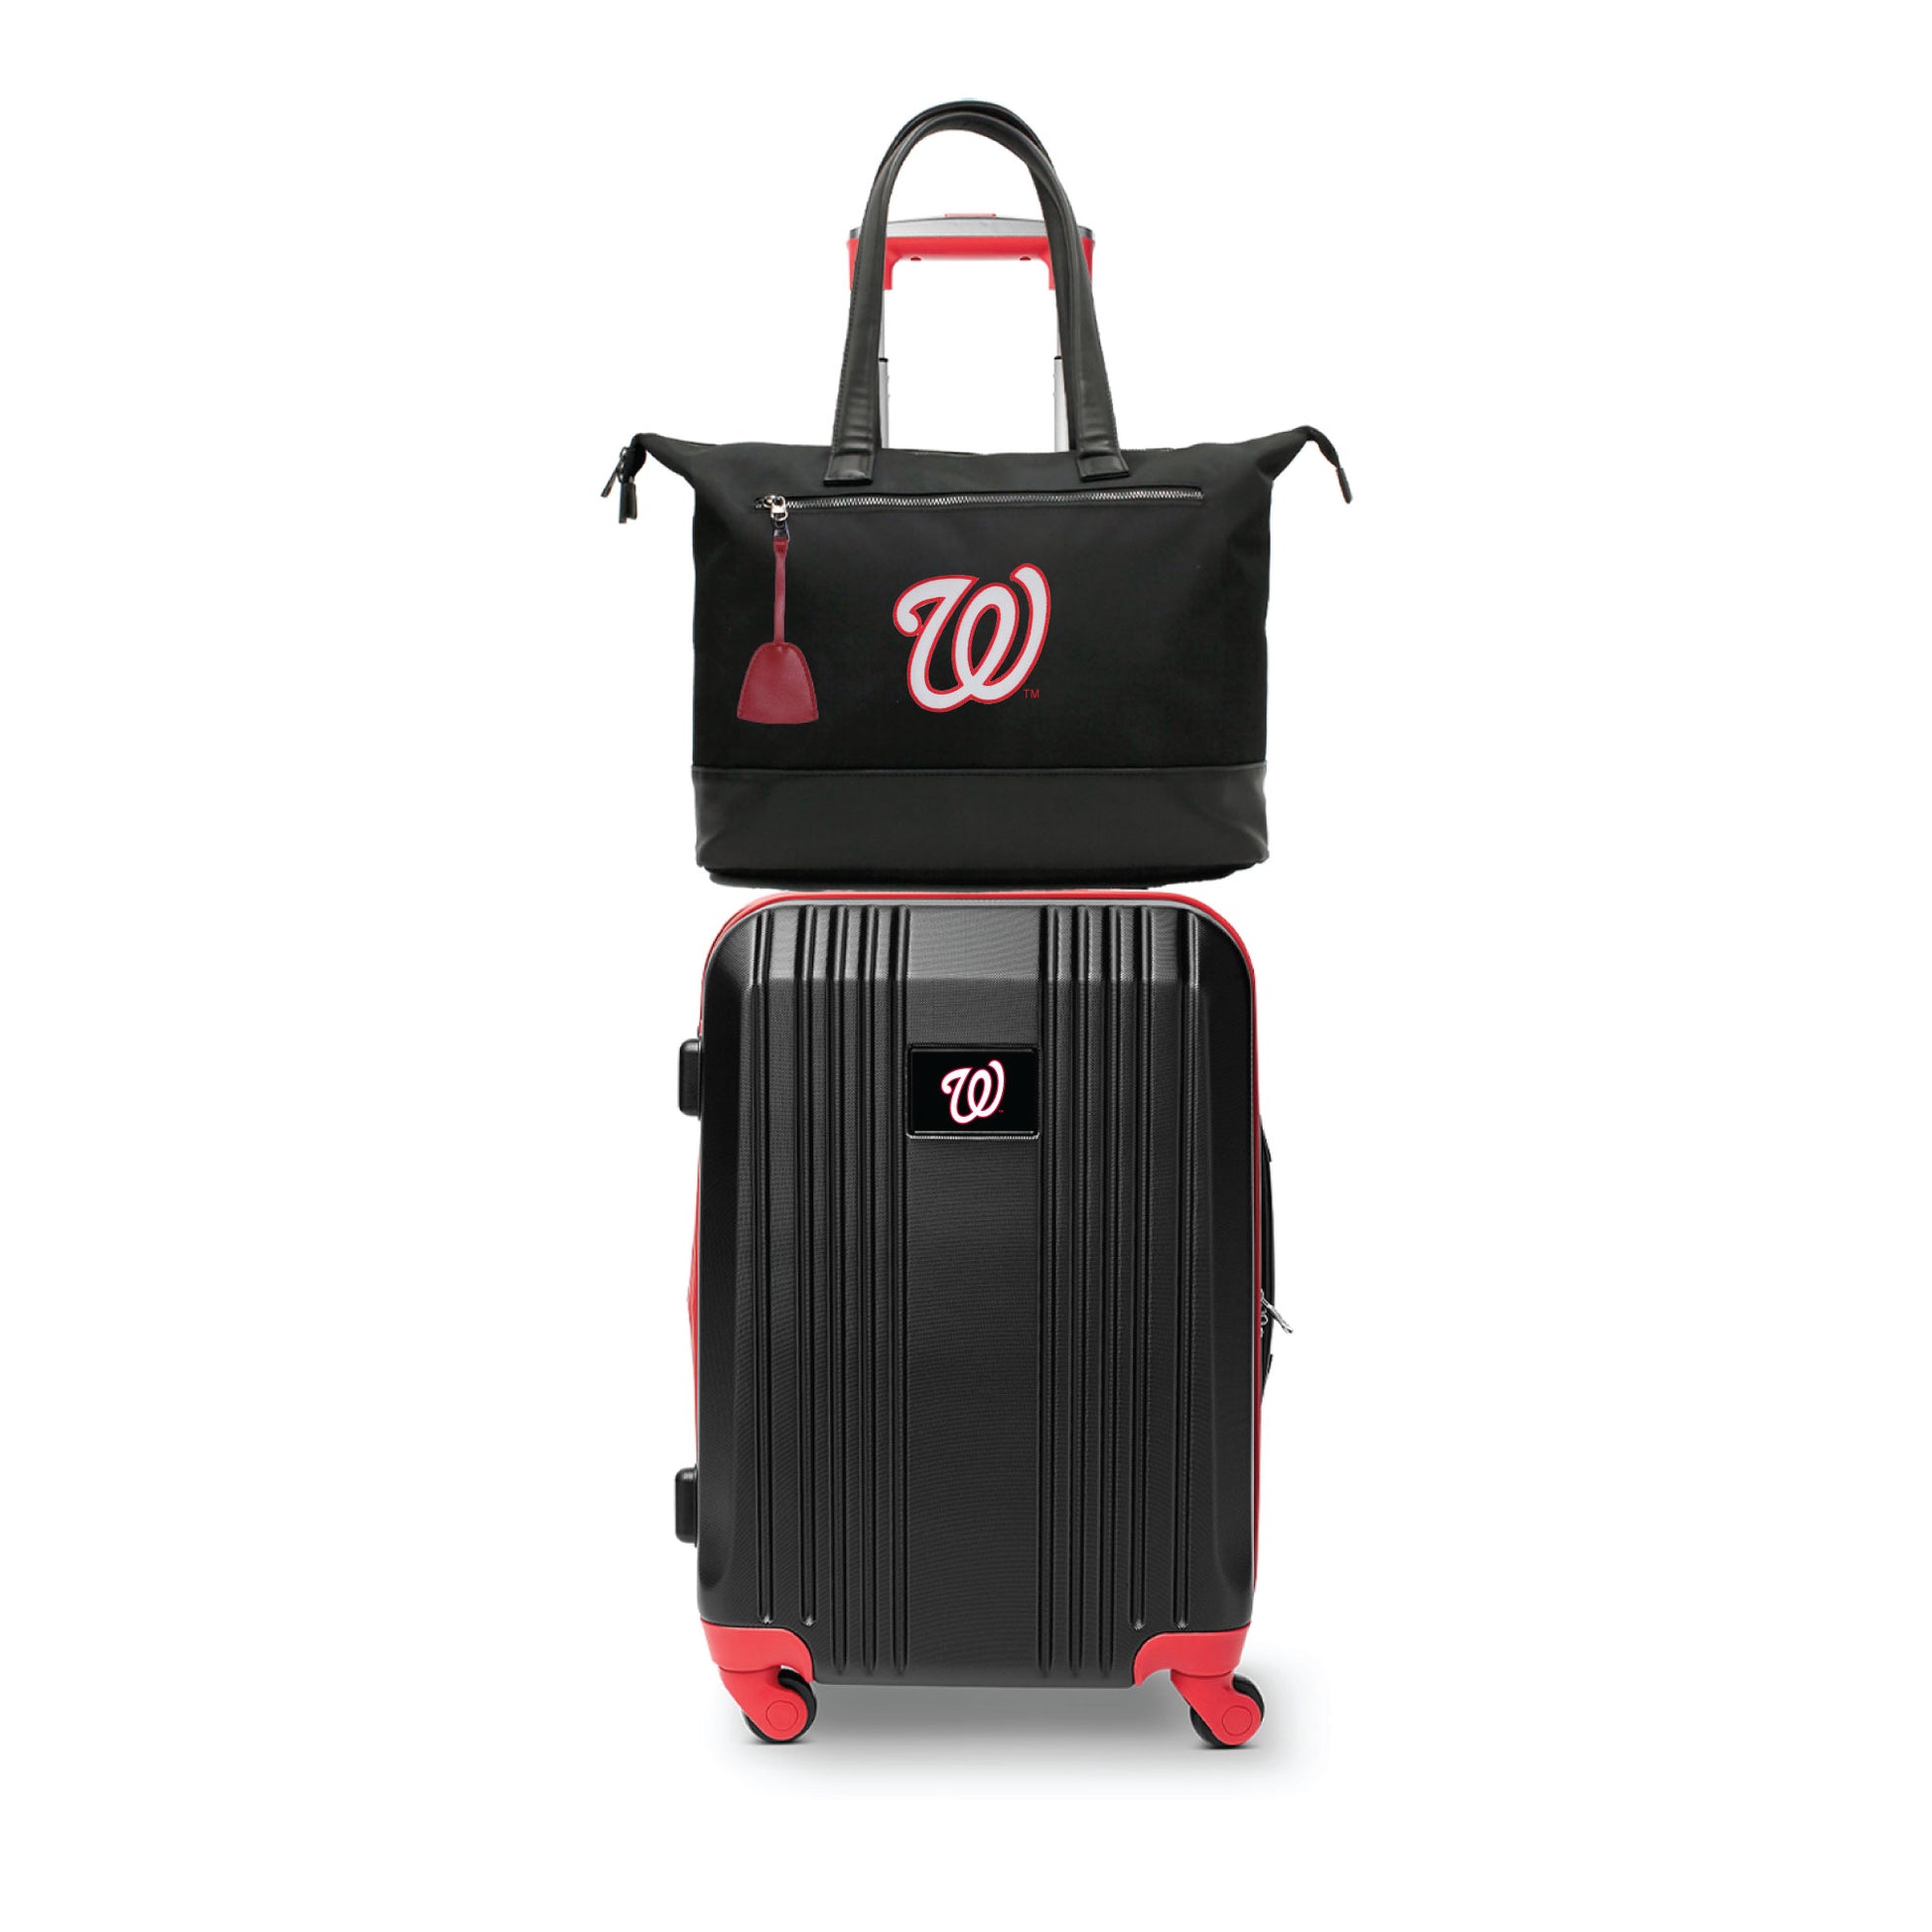 Washington Nationals Premium Laptop Tote Bag and Luggage Set